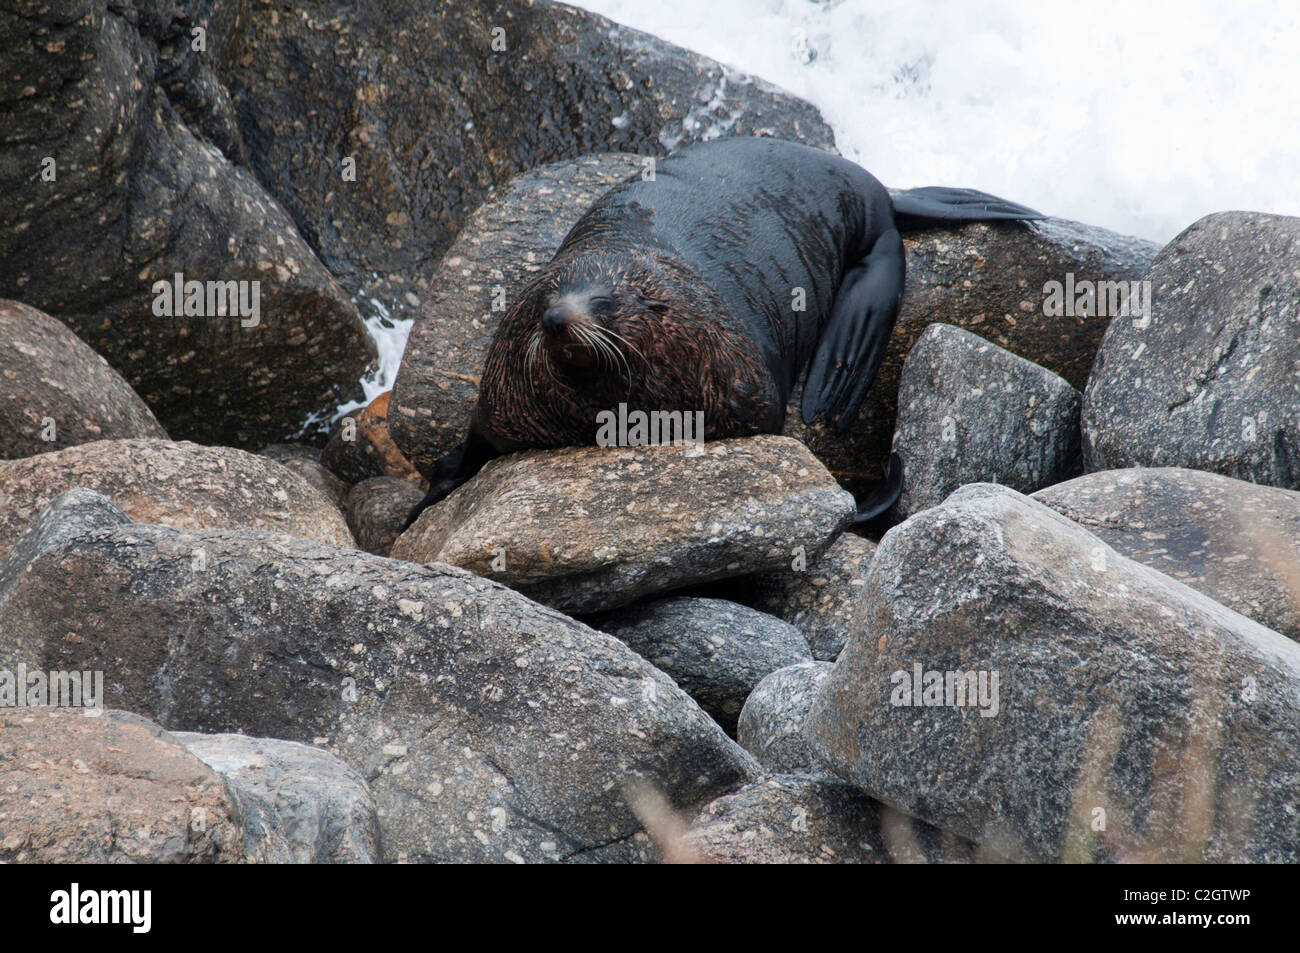 Nuova Zelanda le foche resto sempre sulla costa rocciosa. Neuseeländische Seebären ruhen immer un Felsküsten. Foto Stock